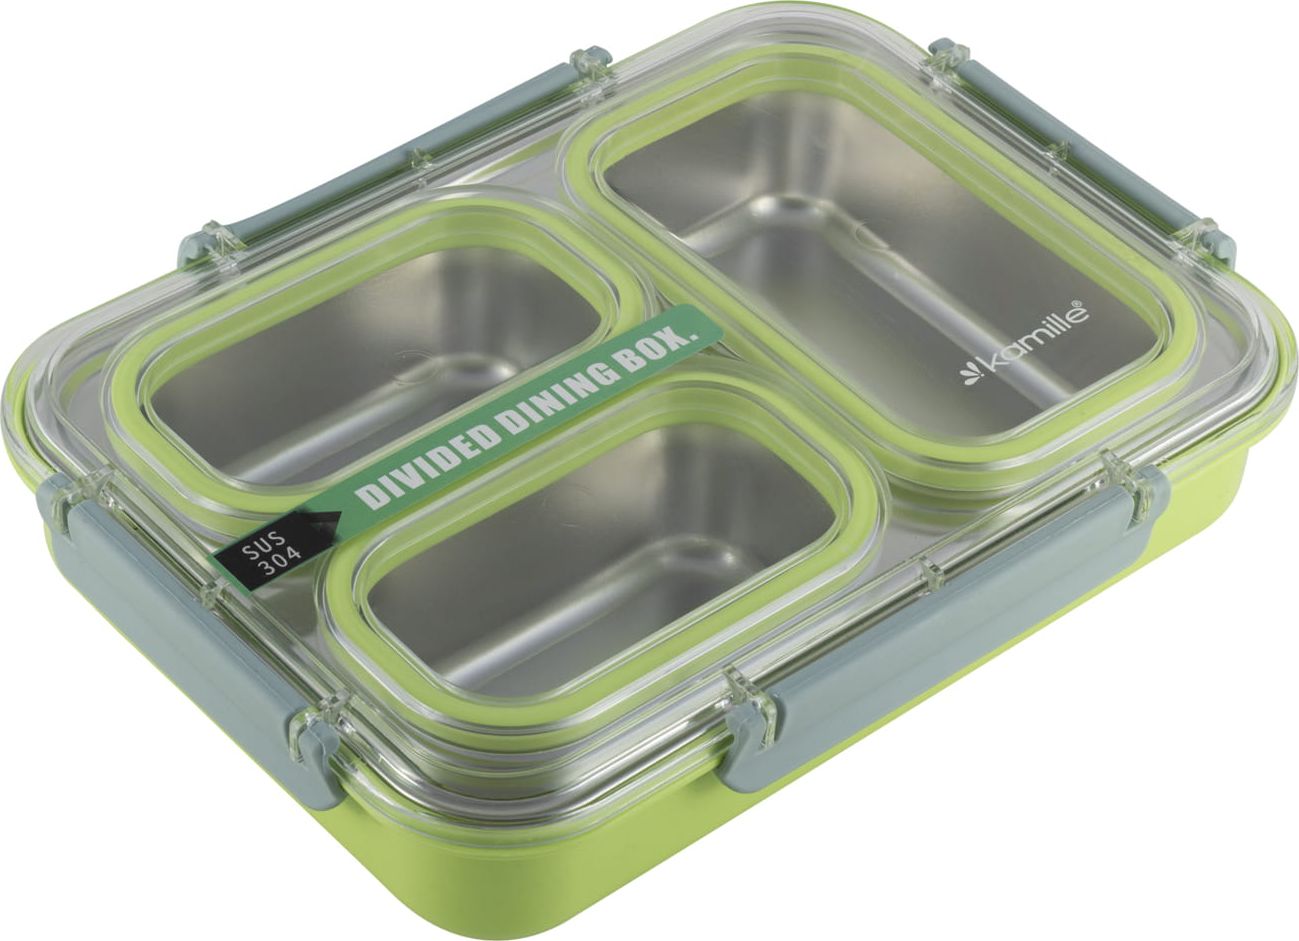 Kamille Lunch container, lunchbox with compartments for work and school Pārtikas uzglabāšanas piederumi